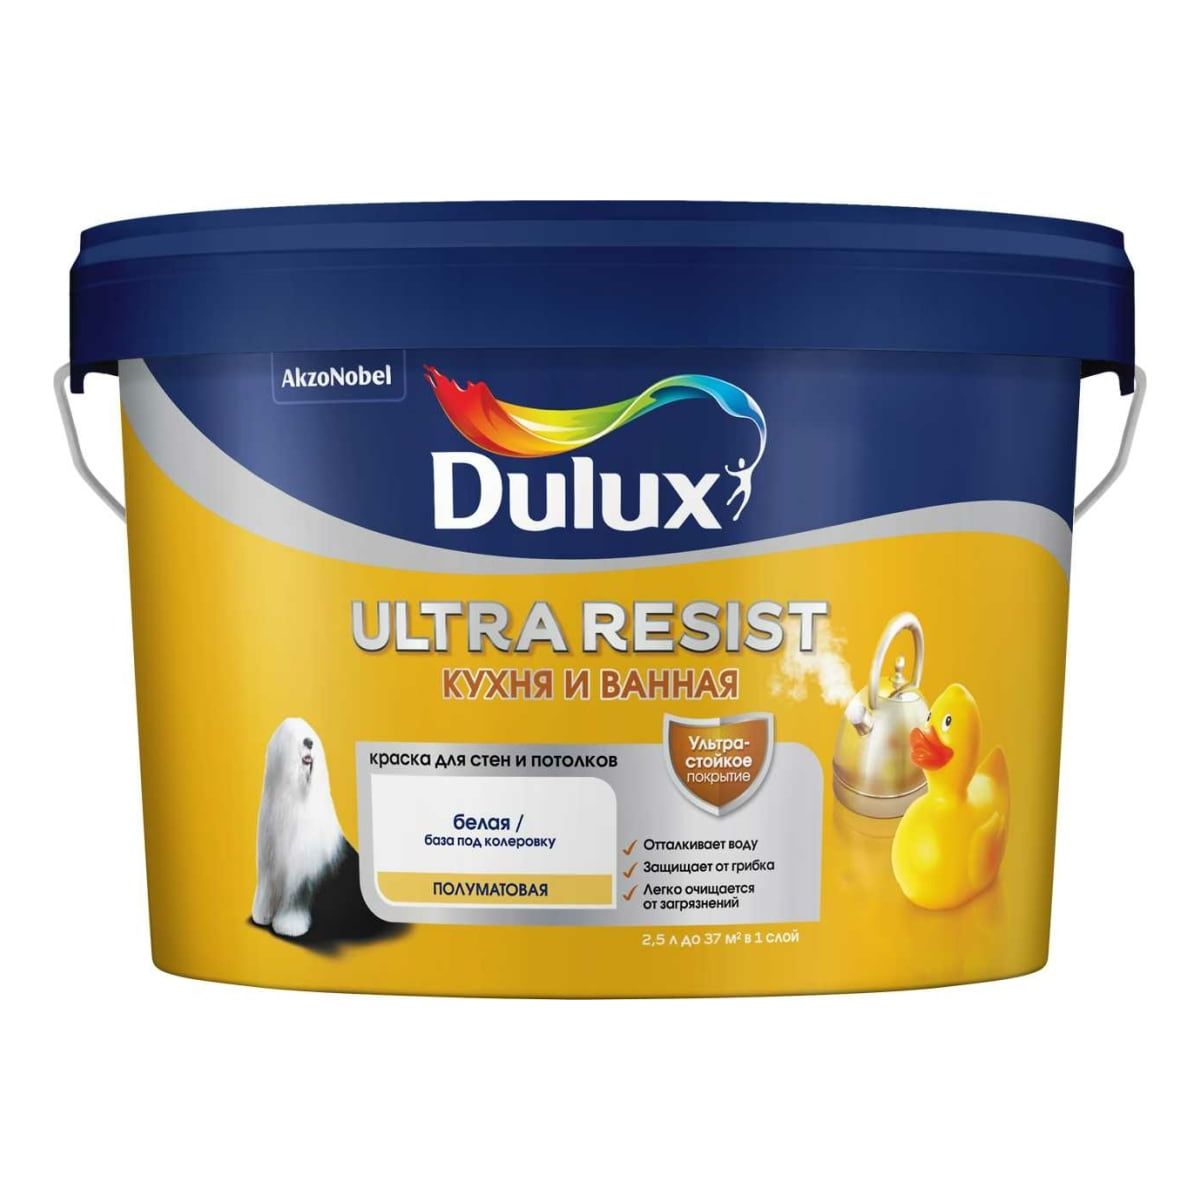 Краска Dulux Ultra Resist кухня и ванная полуматовая, BW, 2,5 л краска водно дисперсионная моющаяся dulux ultra resist кухня и ванная полуматовая бес ная основа вс 0 9 л